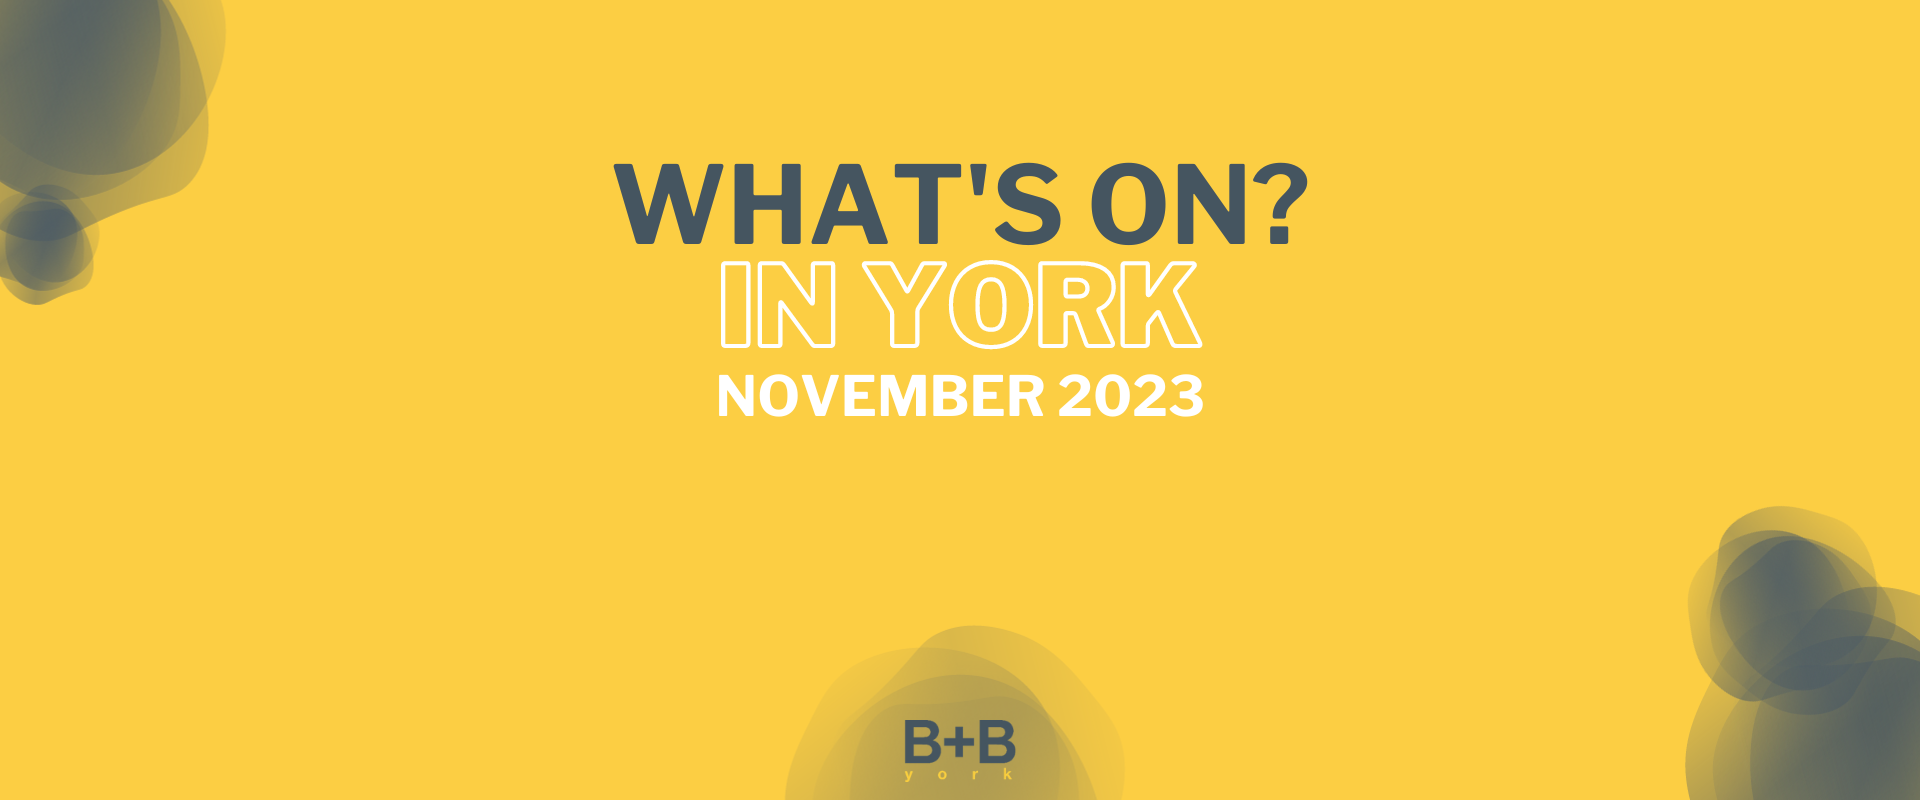 What's on in York - November 2023 - B+B York